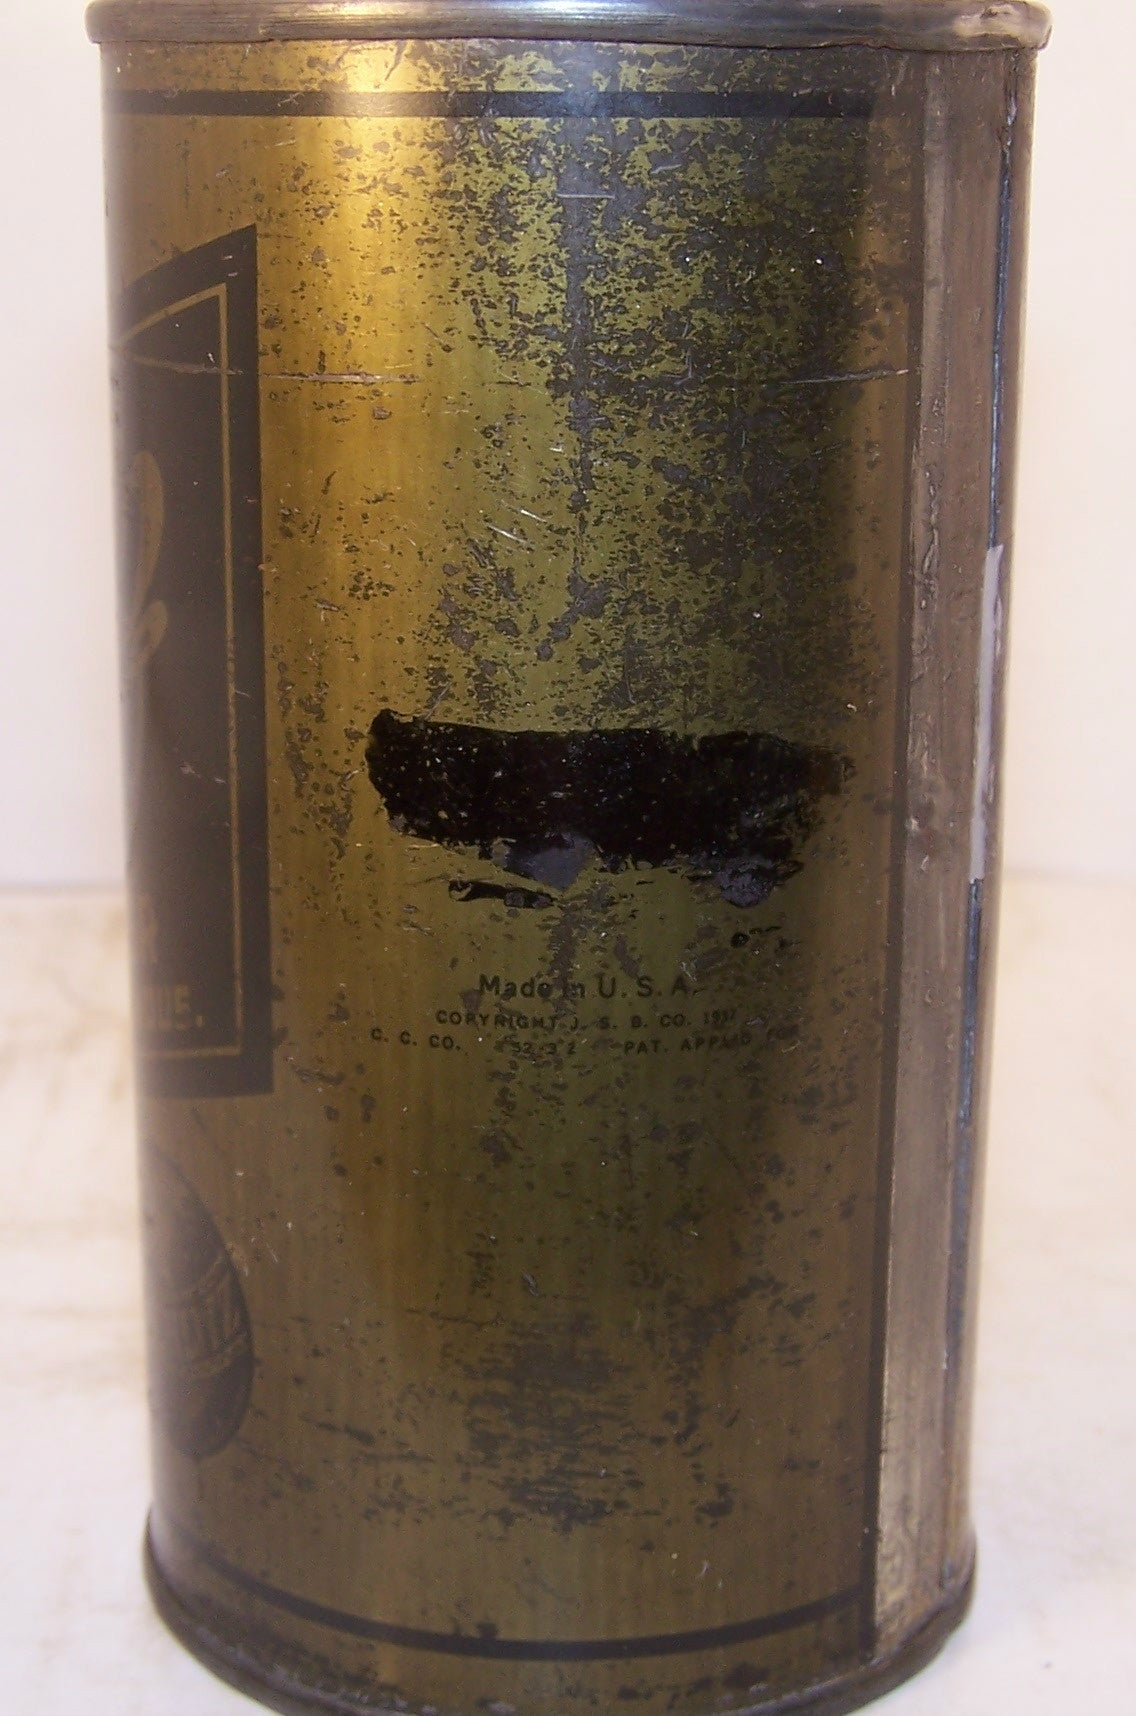 Schlitz Olive Drab, USBC 129-16 Grade 1 Sold on 3/2/15